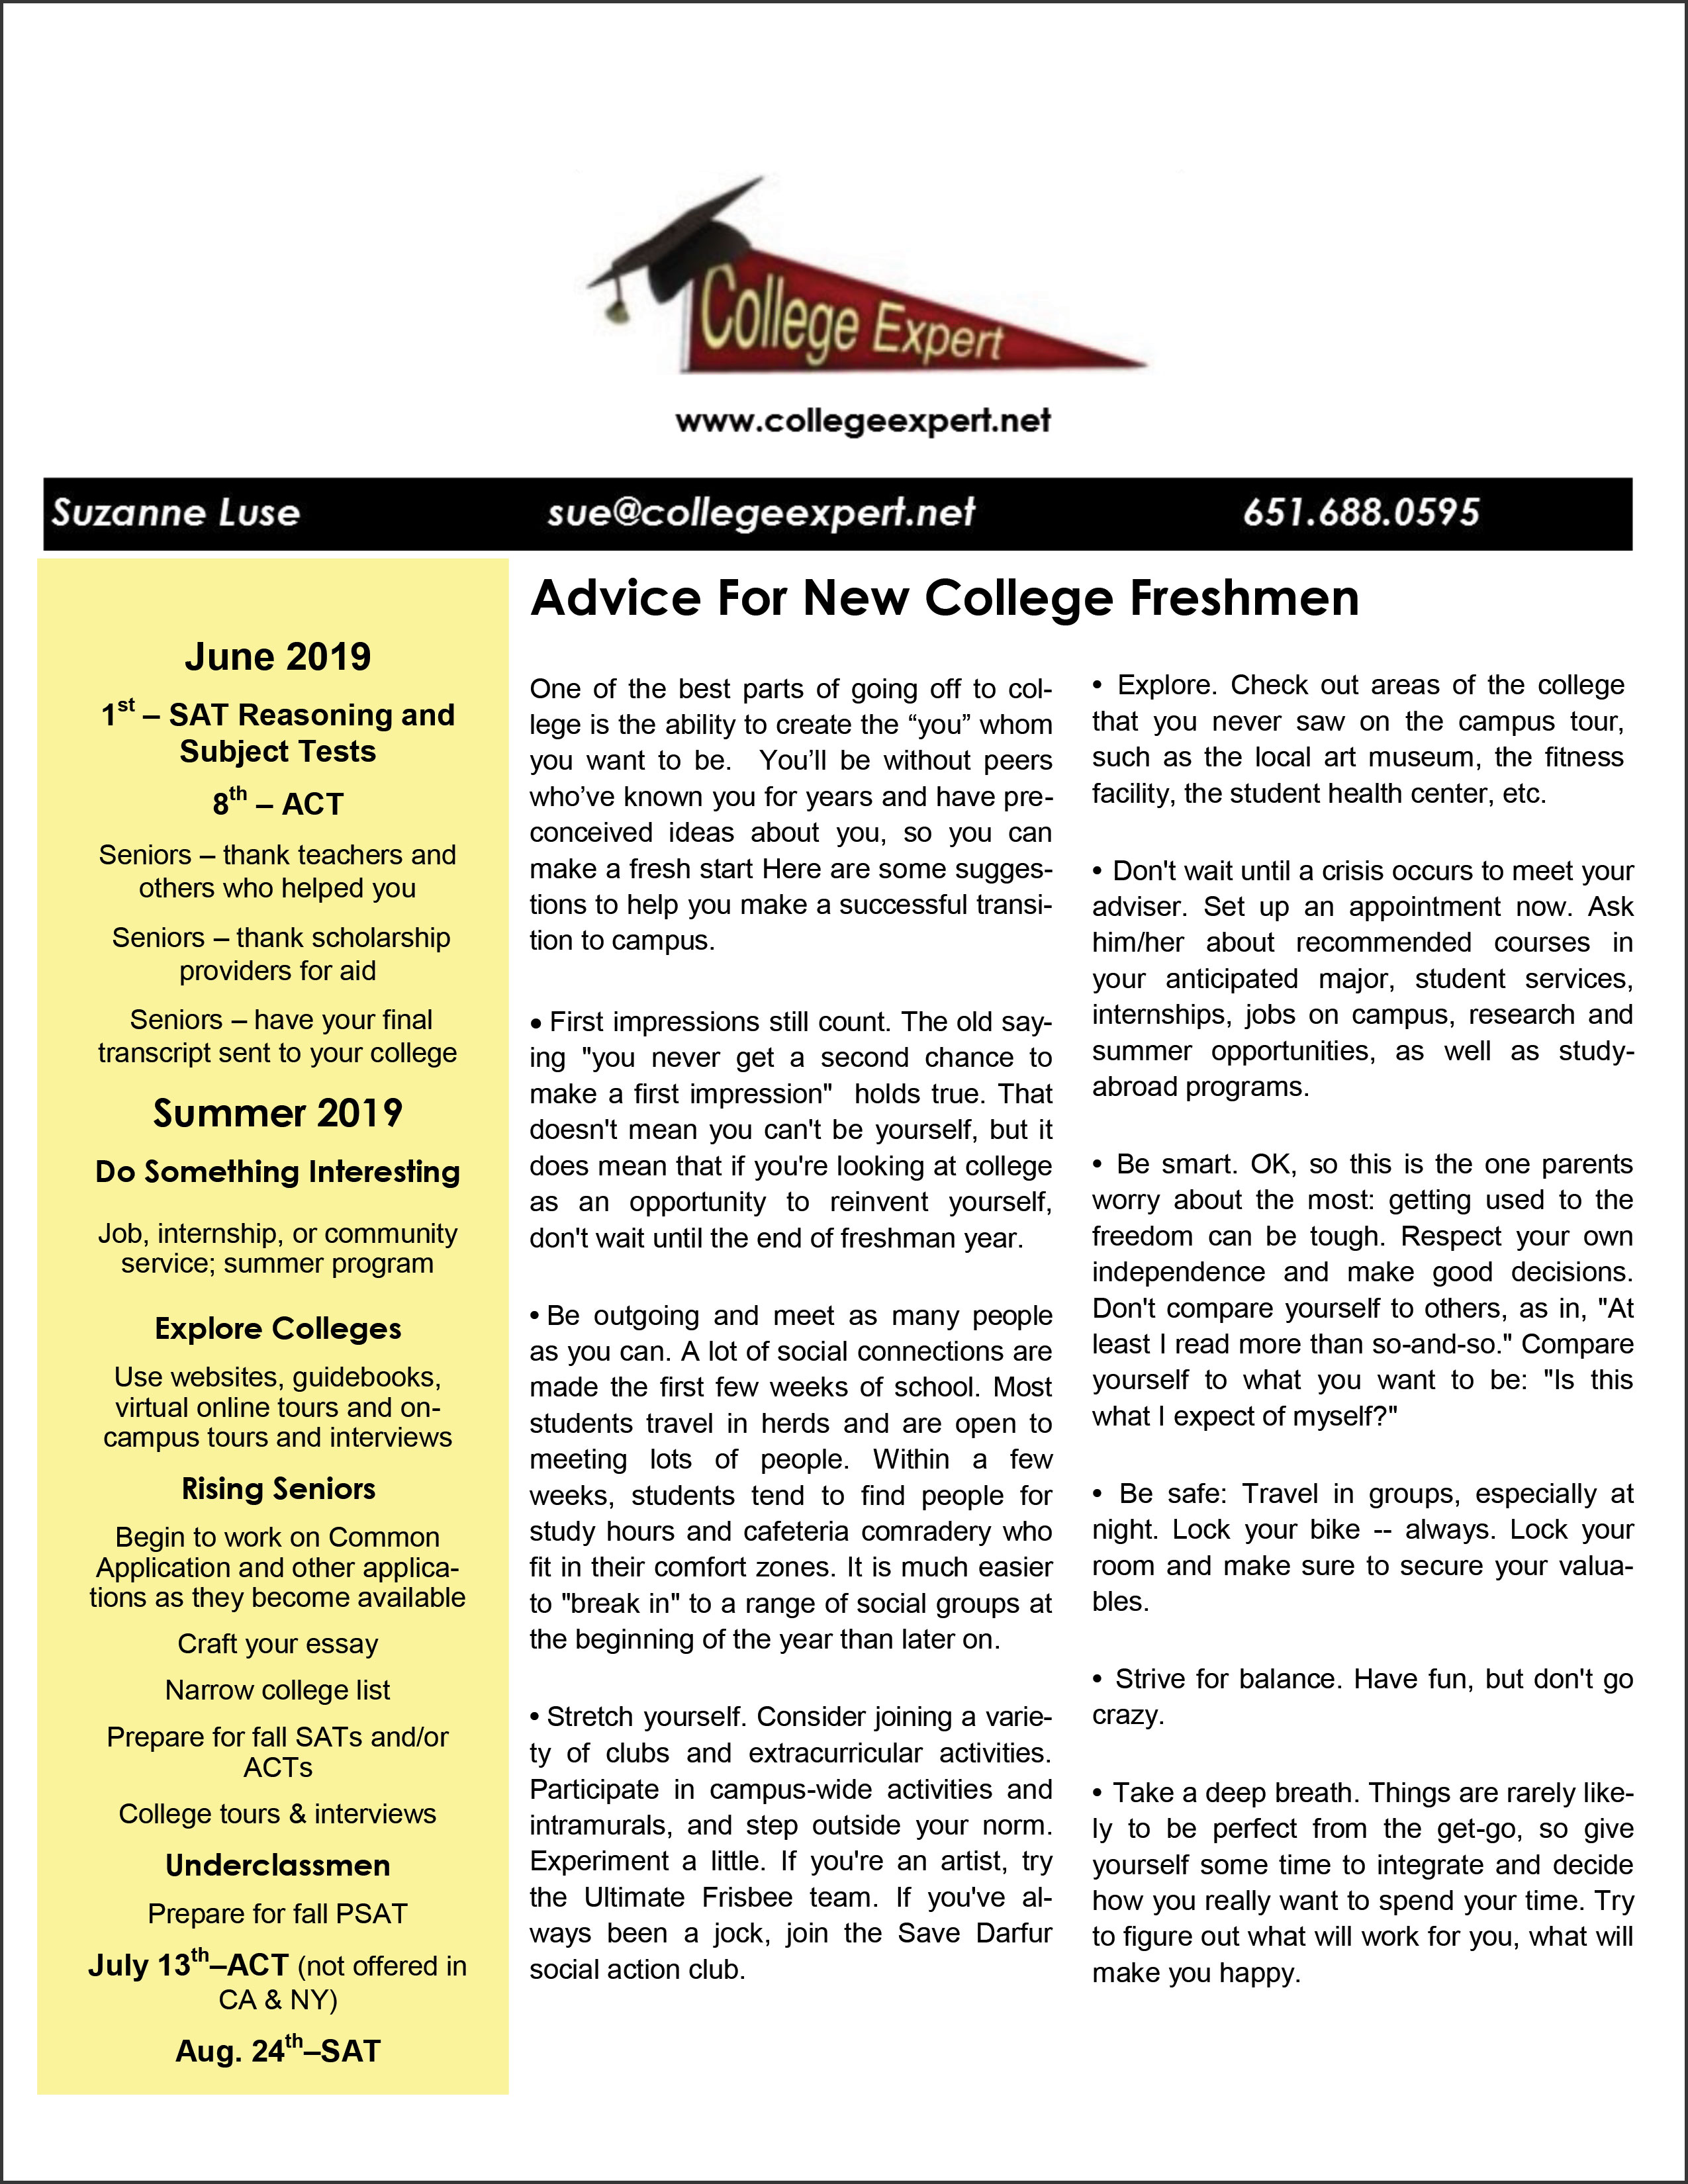 June/Summer 2019 College Expert Newsletter